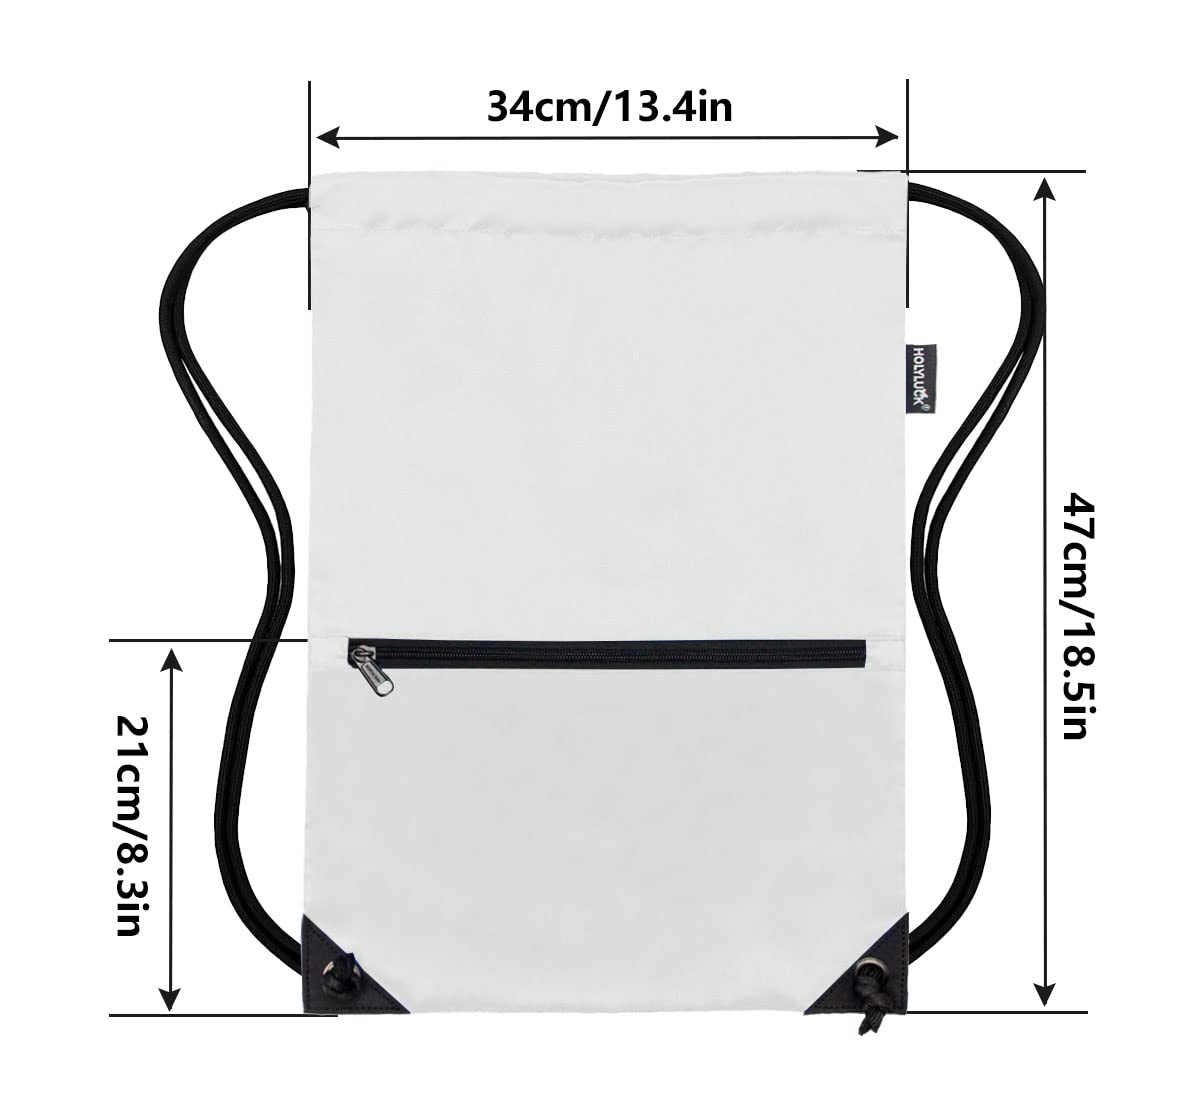 Drawstring Backpack Bag Sport Gym Sackpack White HLC001